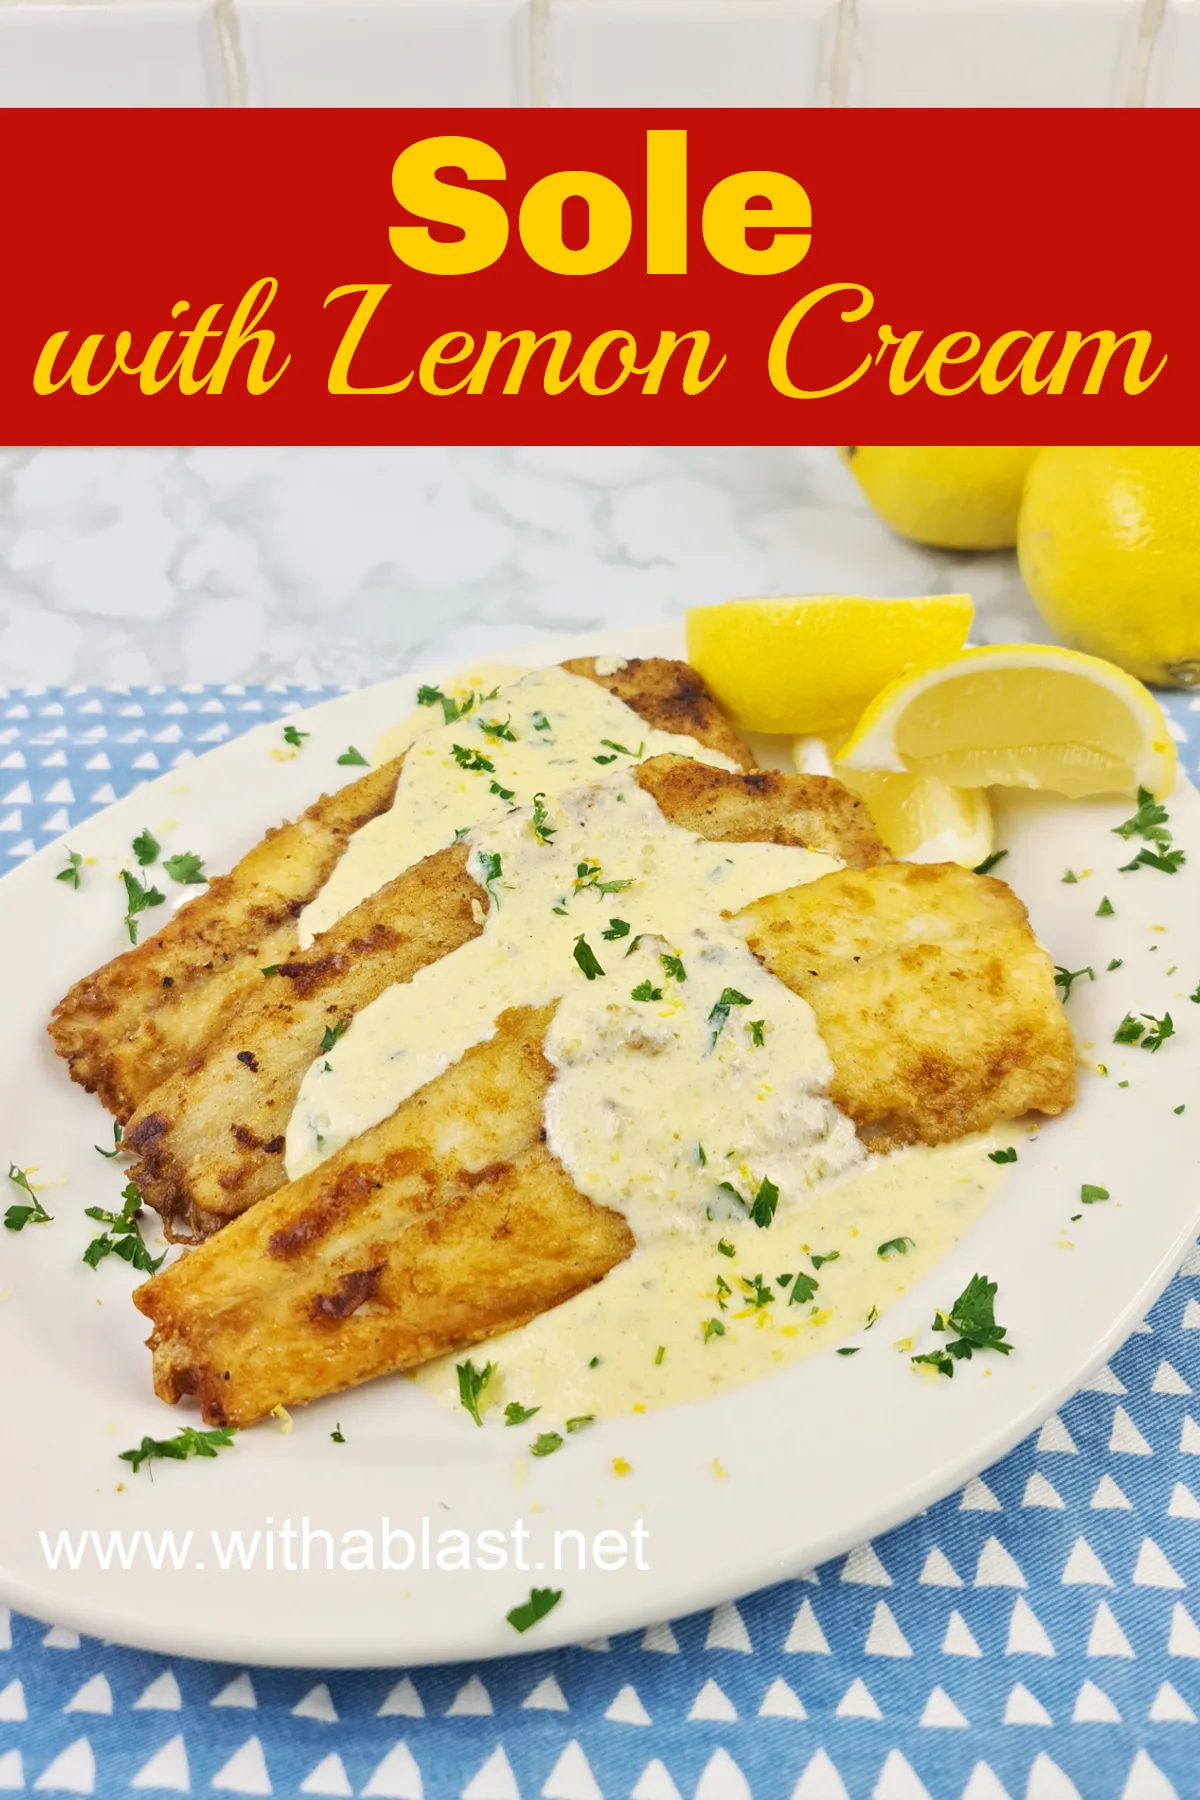 Sole with Lemon Cream